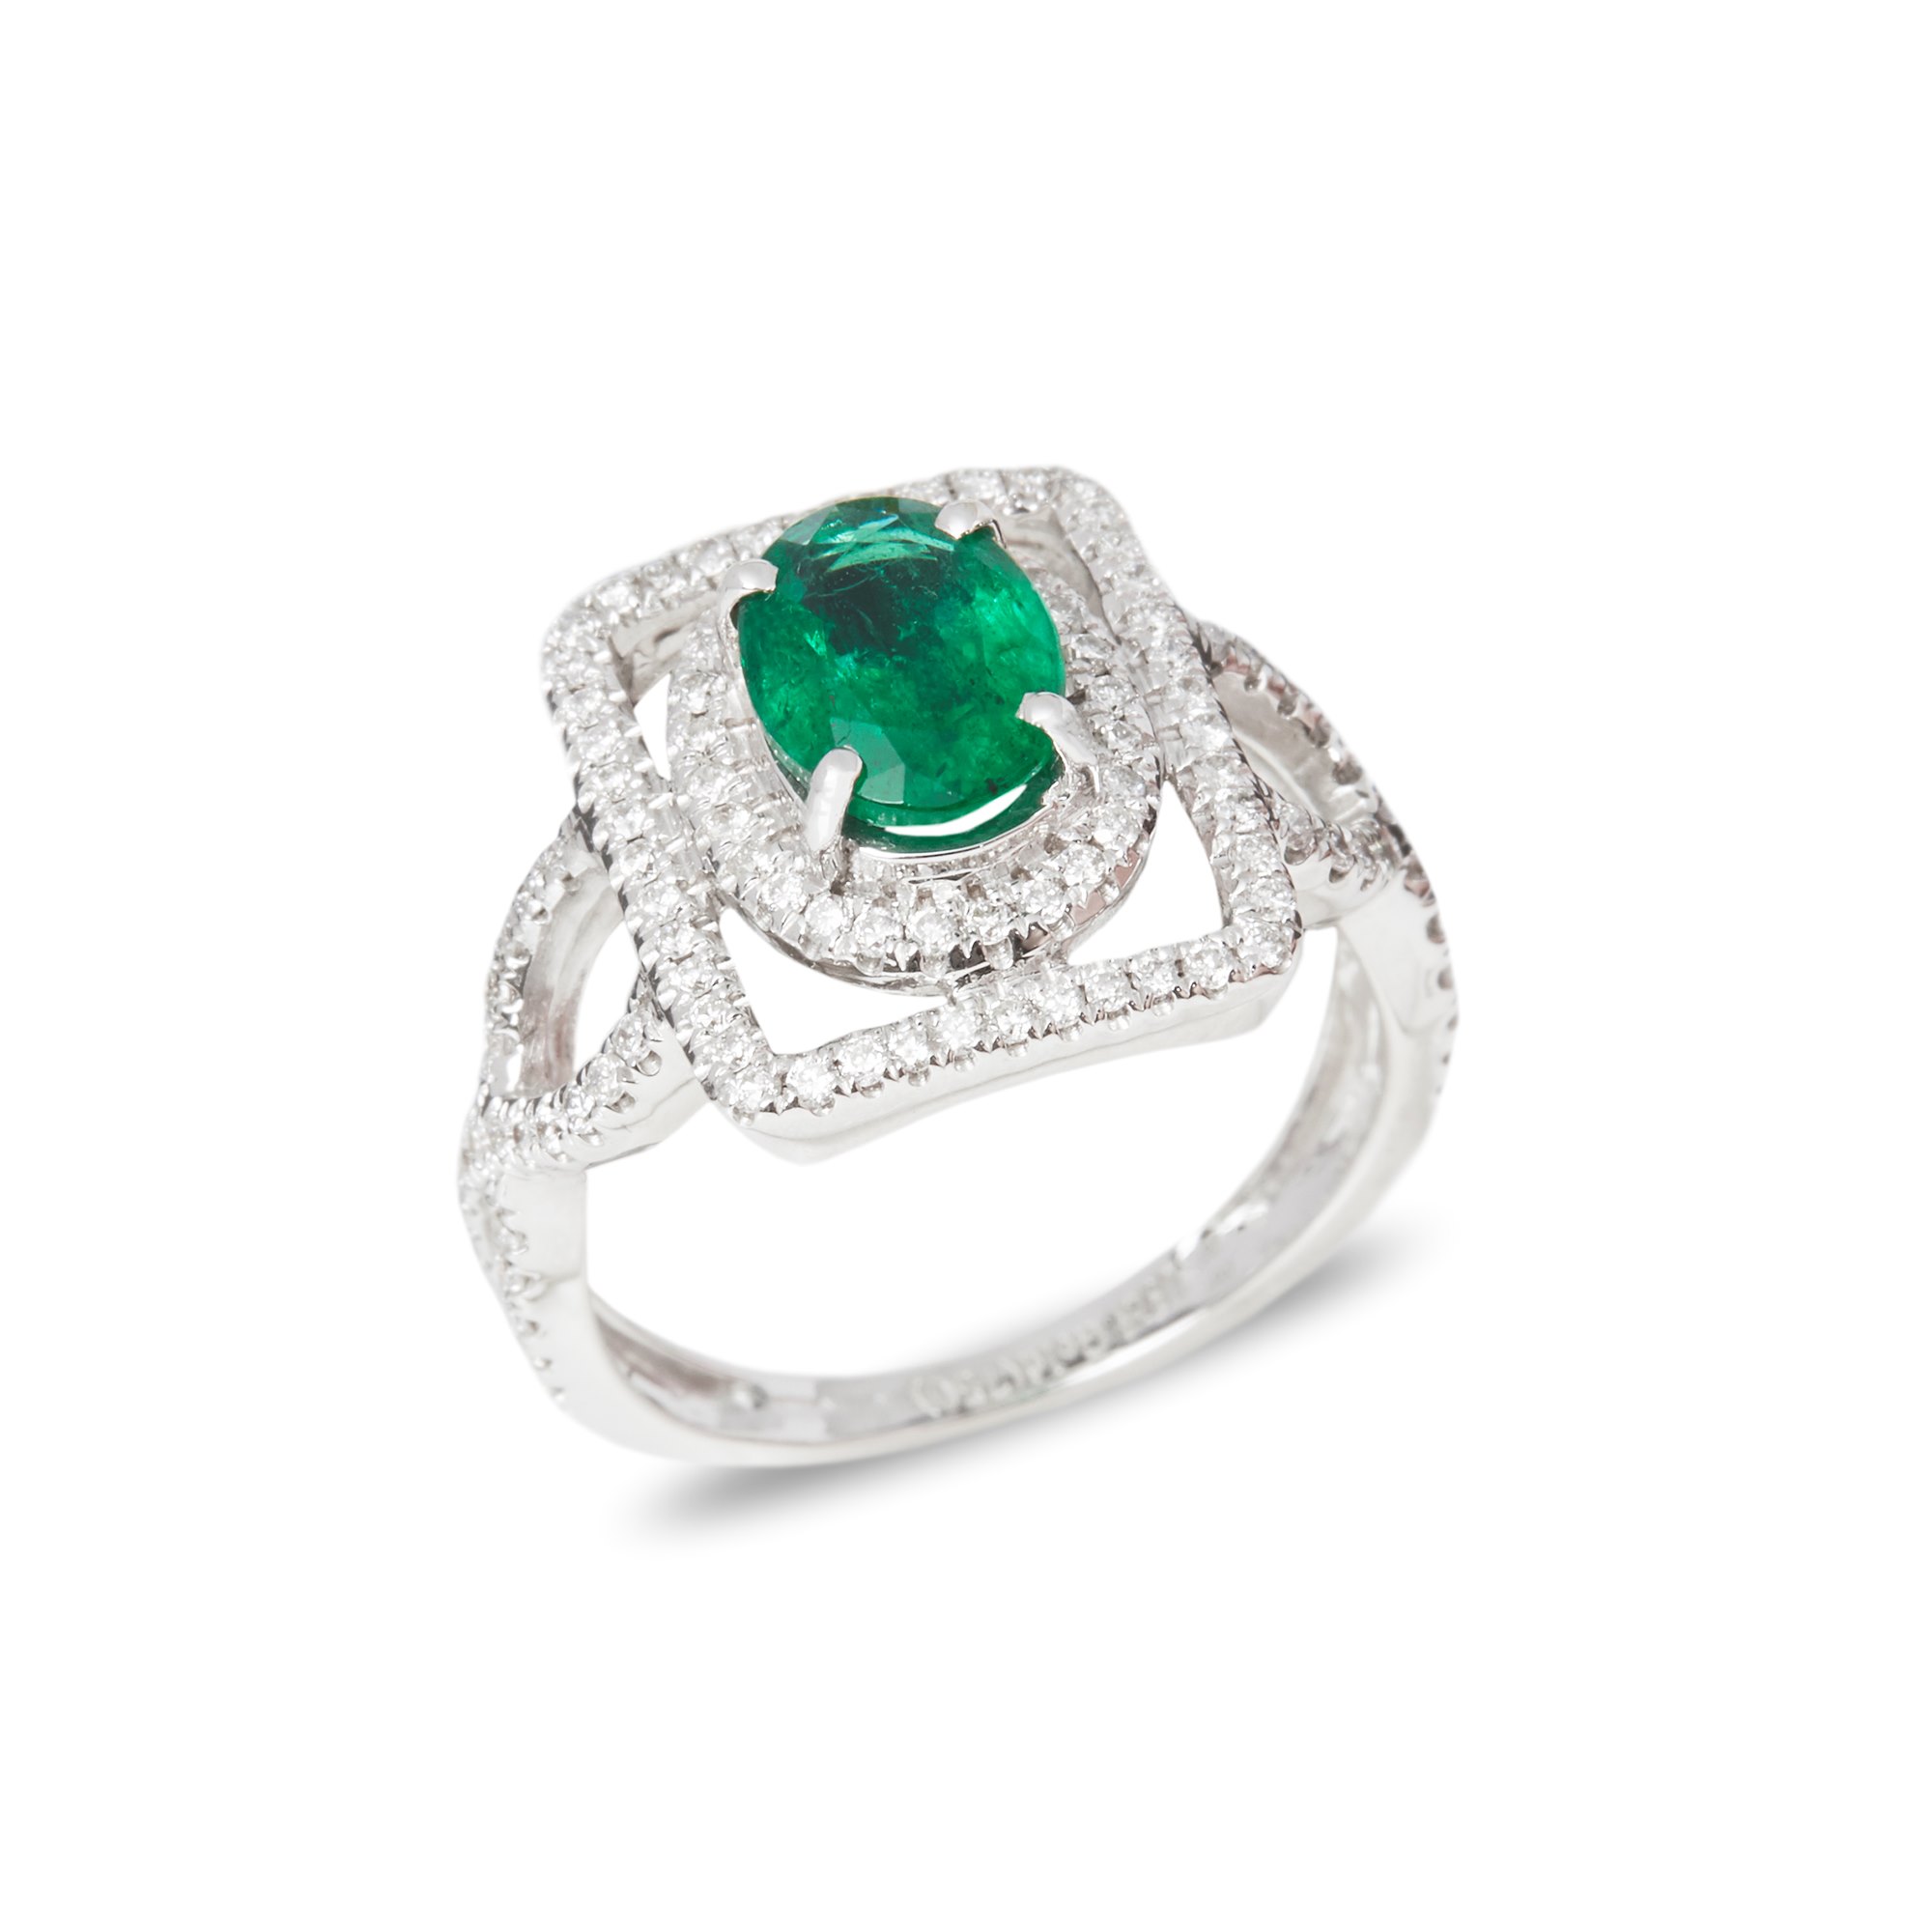 David Jerome Certified 1.58ct Untreated Zambian Oval Cut Emerald and Diamond 18ct gold Ring